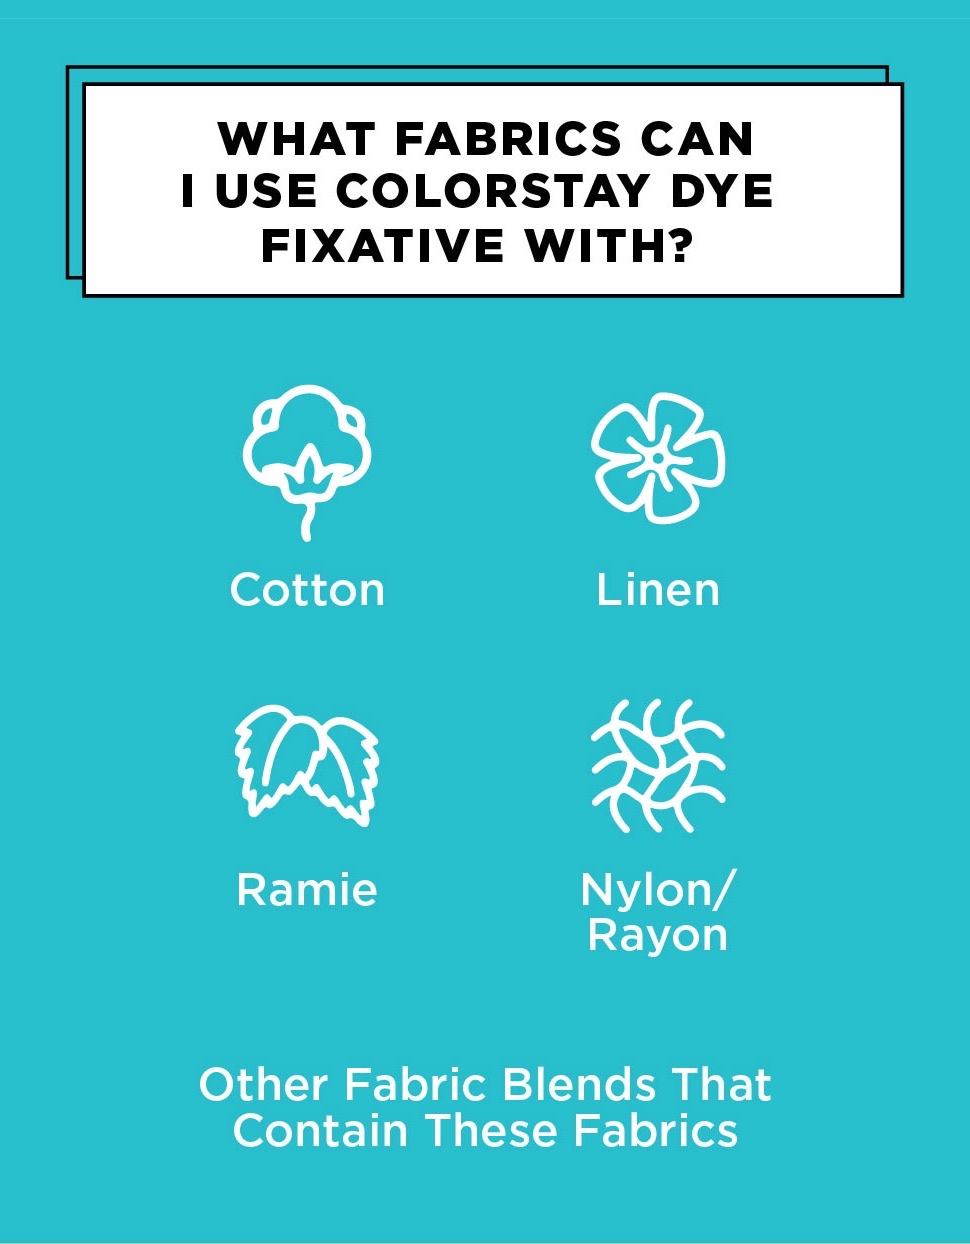 Rit ColorStay Dye Fixative Laundry Treatment & Dyeing Aid, 8 fl oz